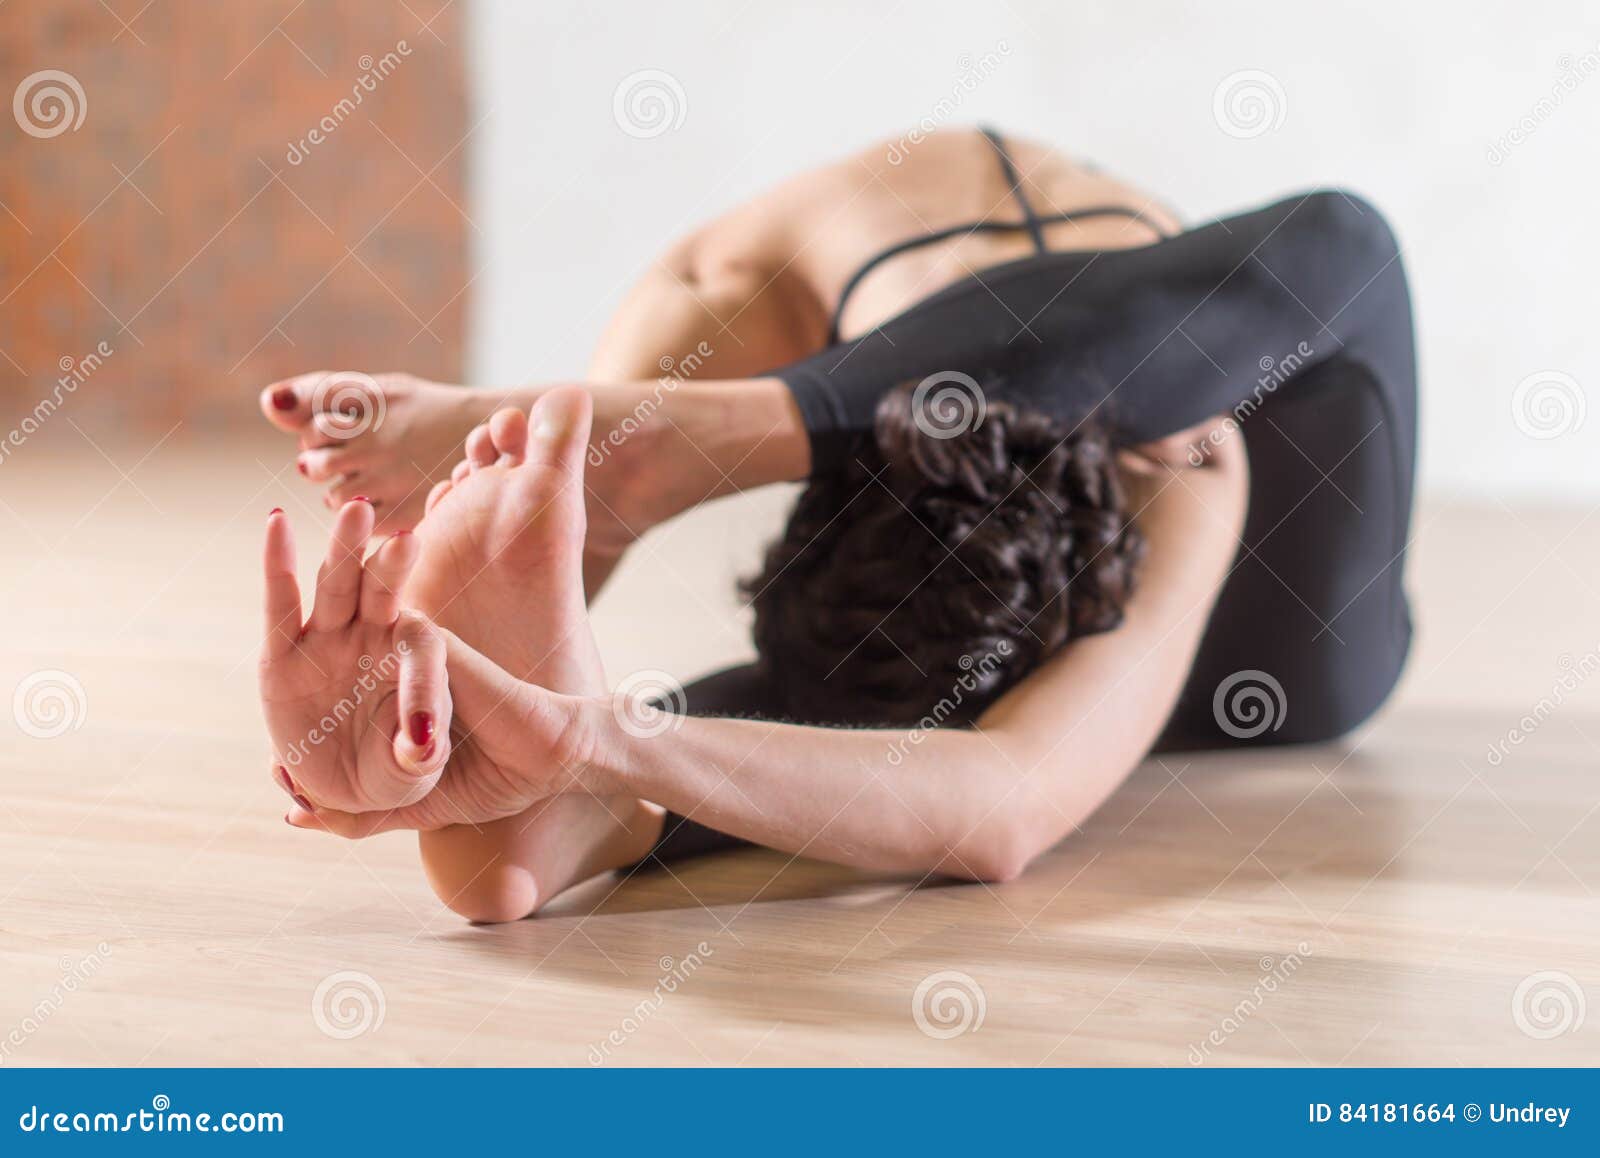 Yoga Pose: Both Feet Behind the Head I | Pocket Yoga